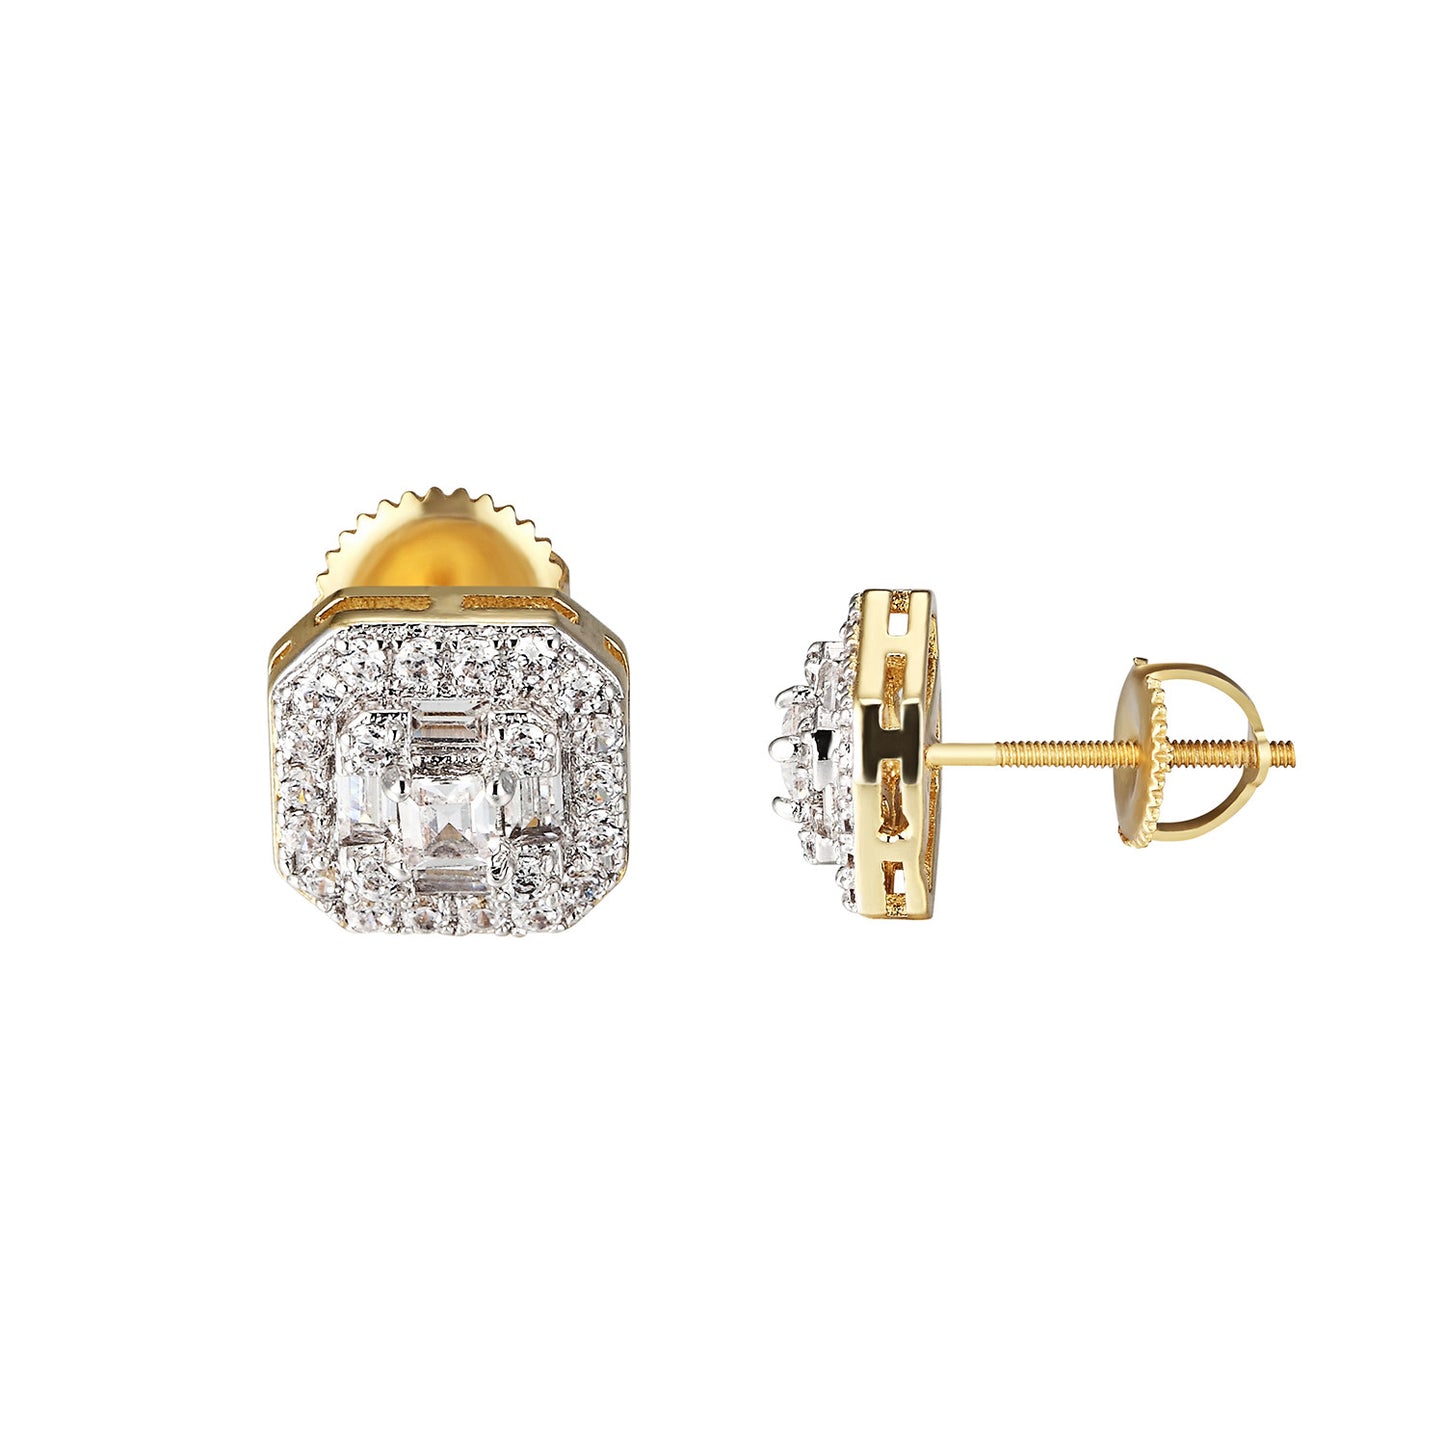 Princess Cut Solitaire Earrings 14k Gold Finish Simulated Diamonds Mens Ladies